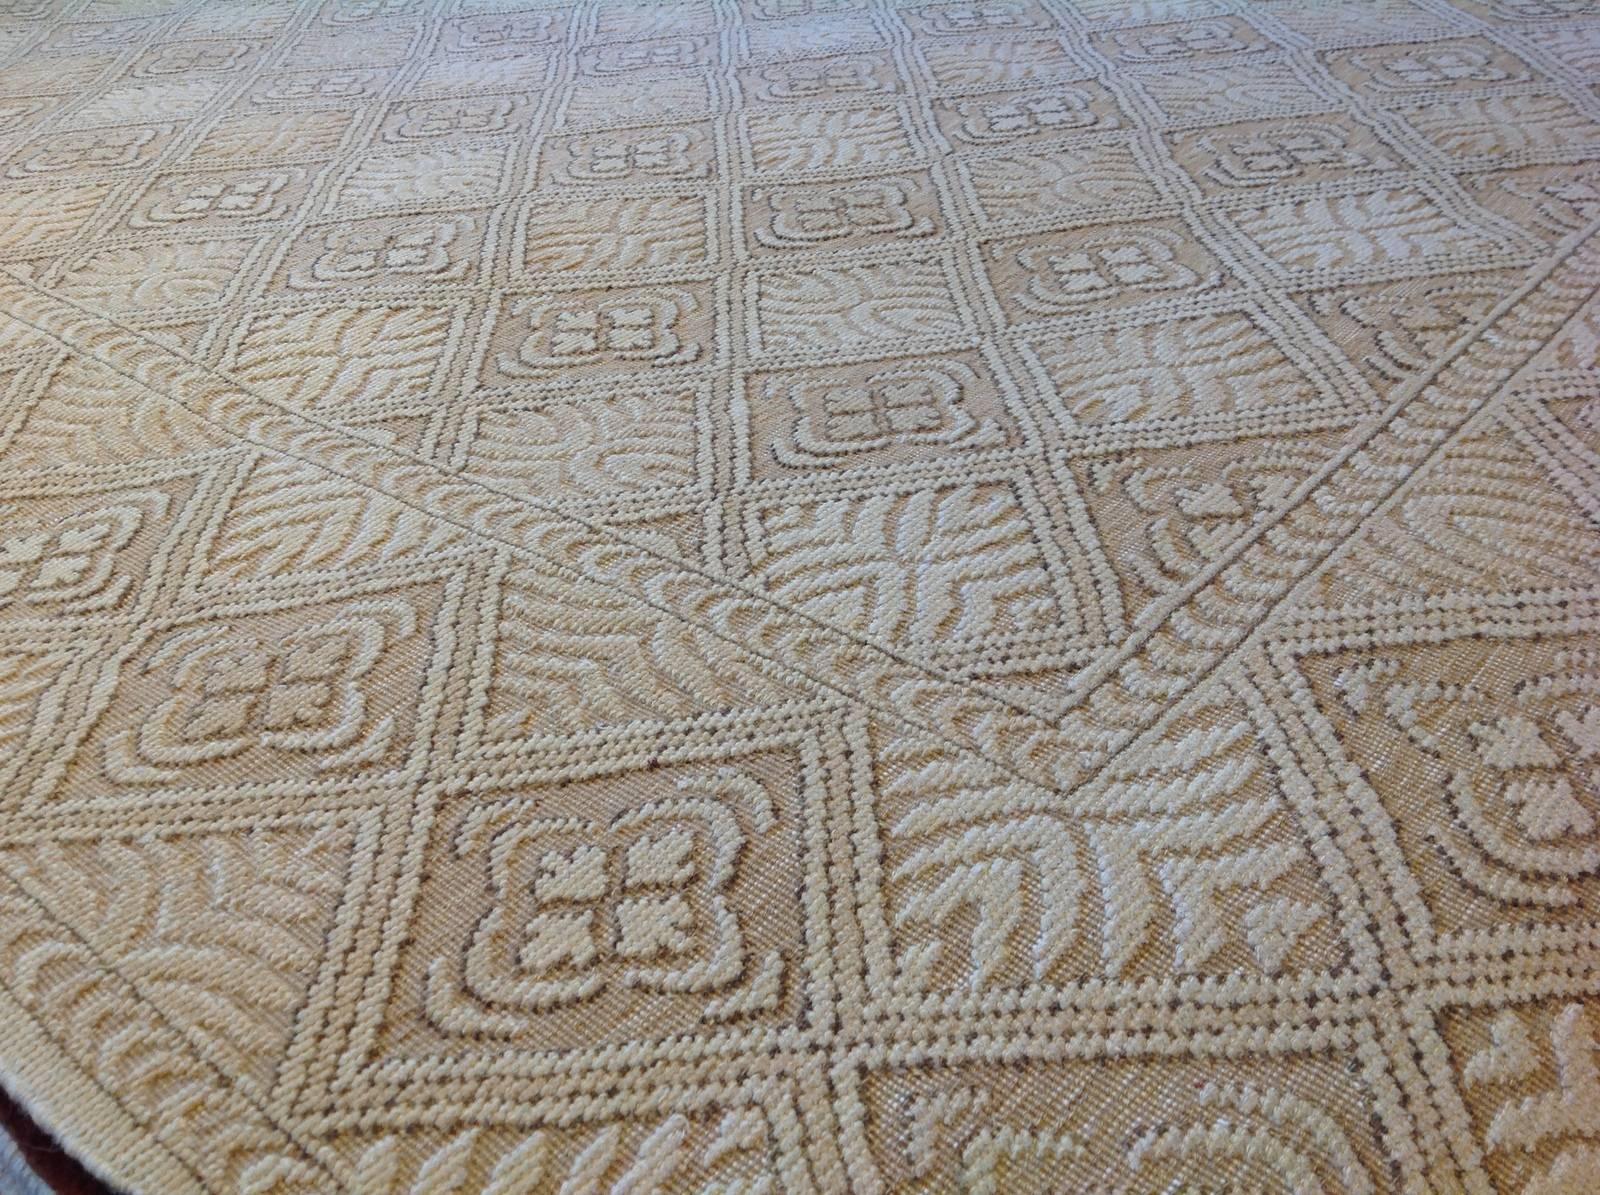 Tone on tone geometric floral rug
colors: tan, cream, brown.